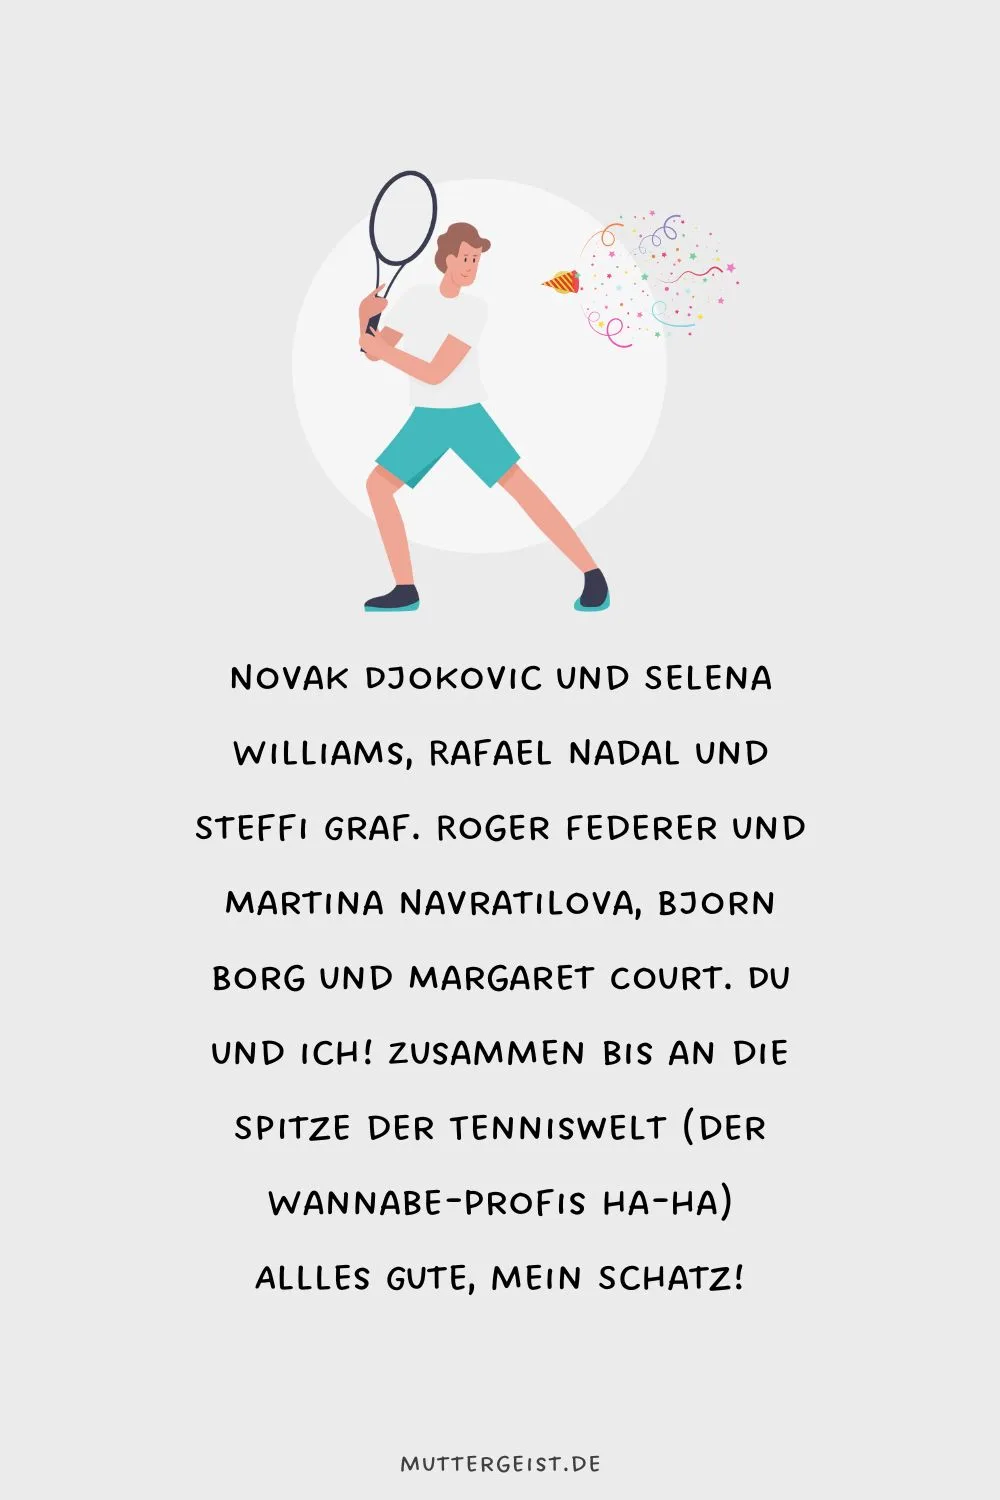 Novak Djokovic und Selena Williams, Rafael Nadal und Steffi Graf